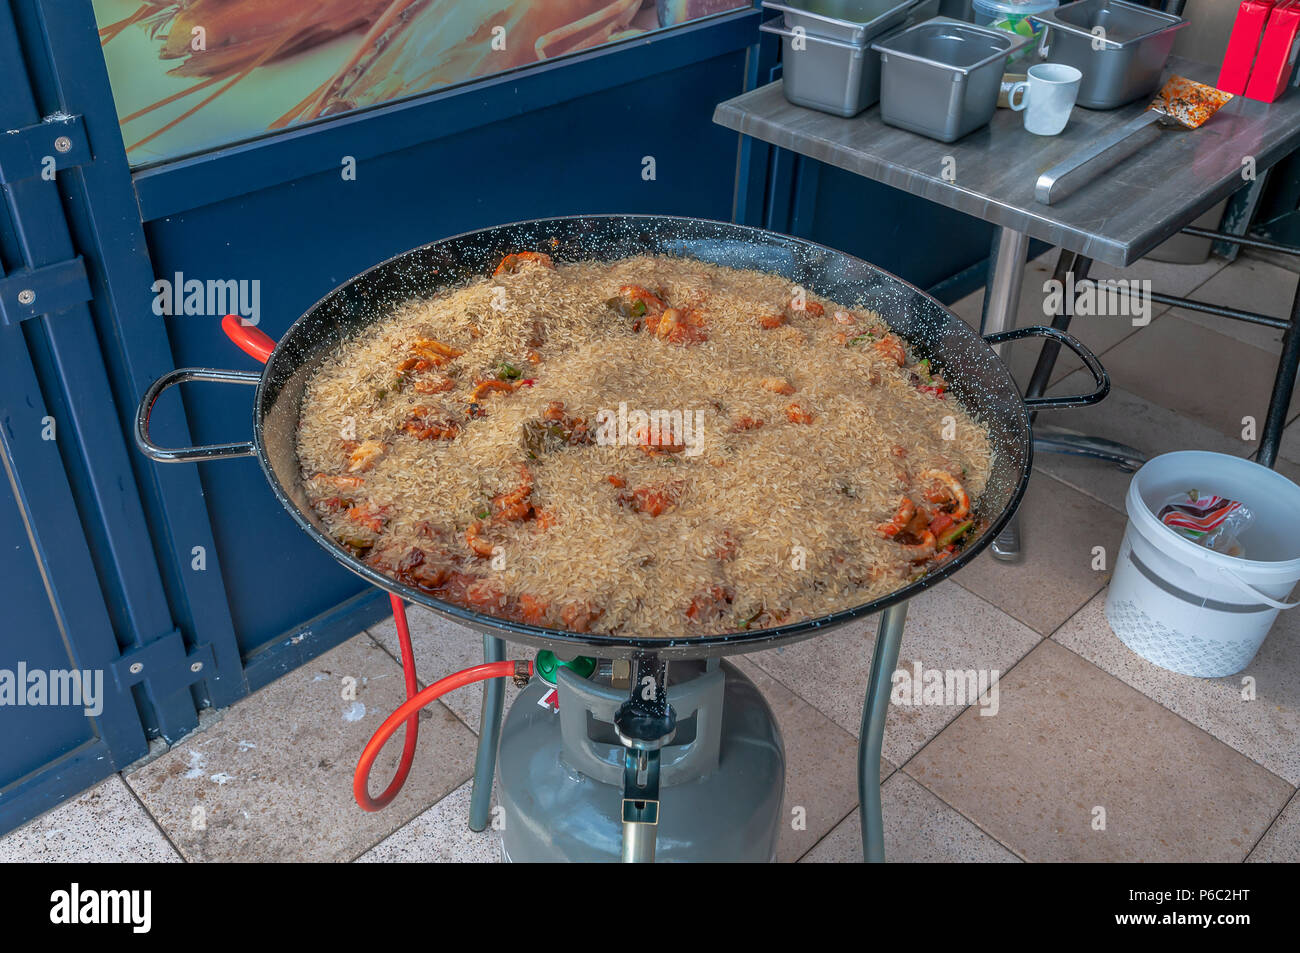 https://c8.alamy.com/comp/P6C2HT/large-wok-pan-filled-with-rice-and-shrimps-P6C2HT.jpg